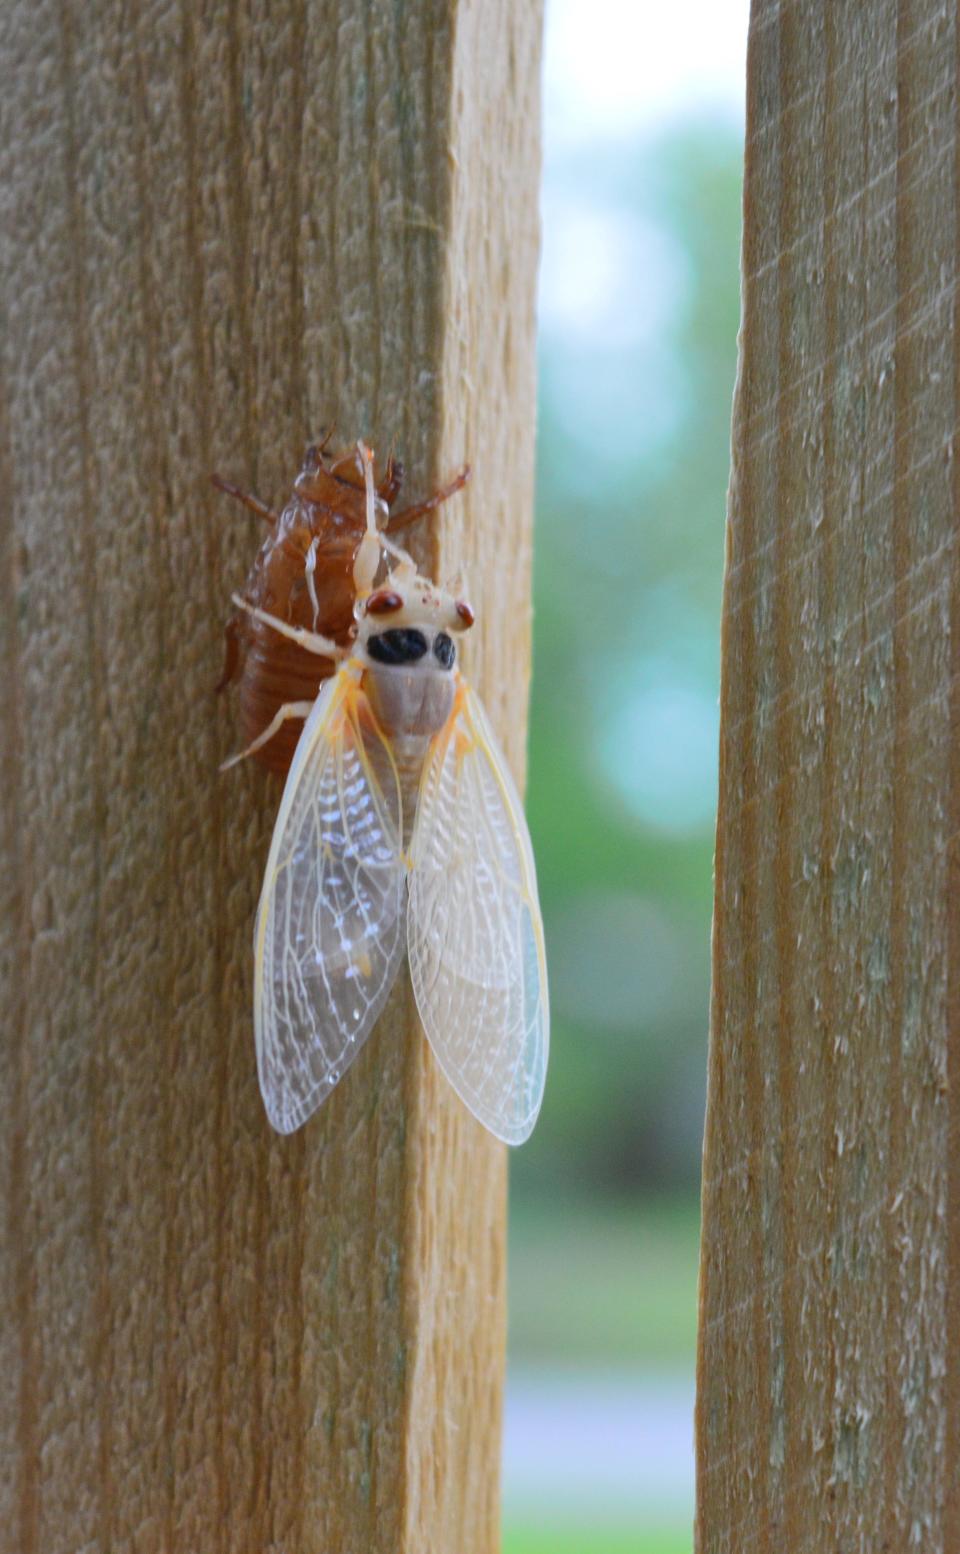 A new adult cicada is still creamy-white since its exoskeleton hasn’t yet hardened. (Carol Kugler / Herald-Times)